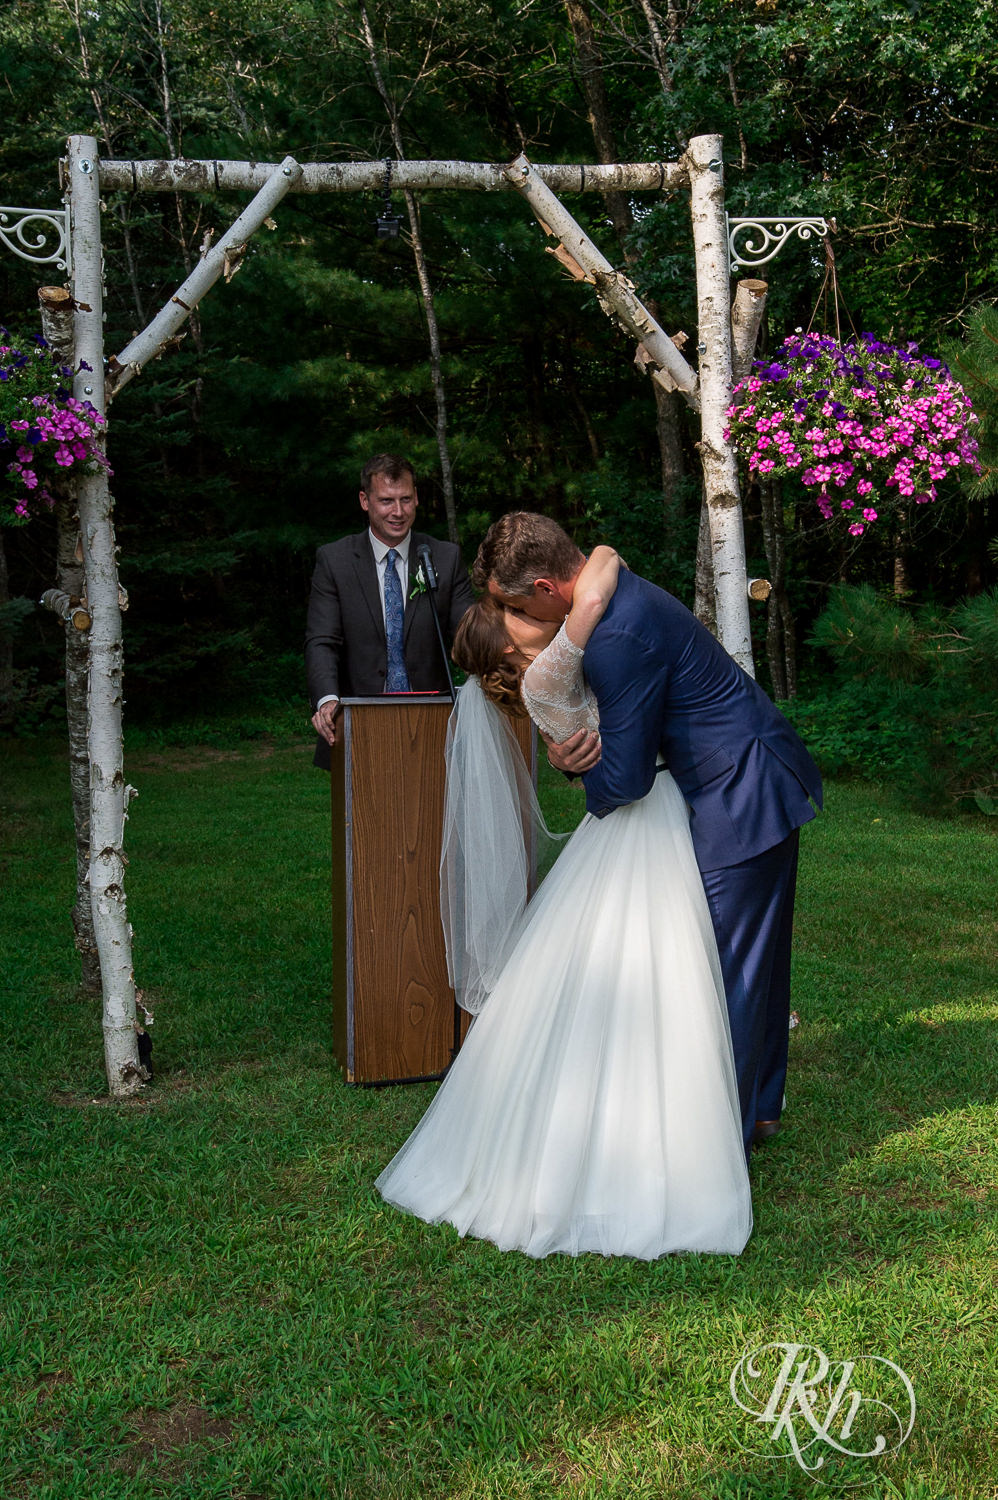 Bride and groom kiss during outdoor wedding ceremony in Elk Mound, Wisconsin.